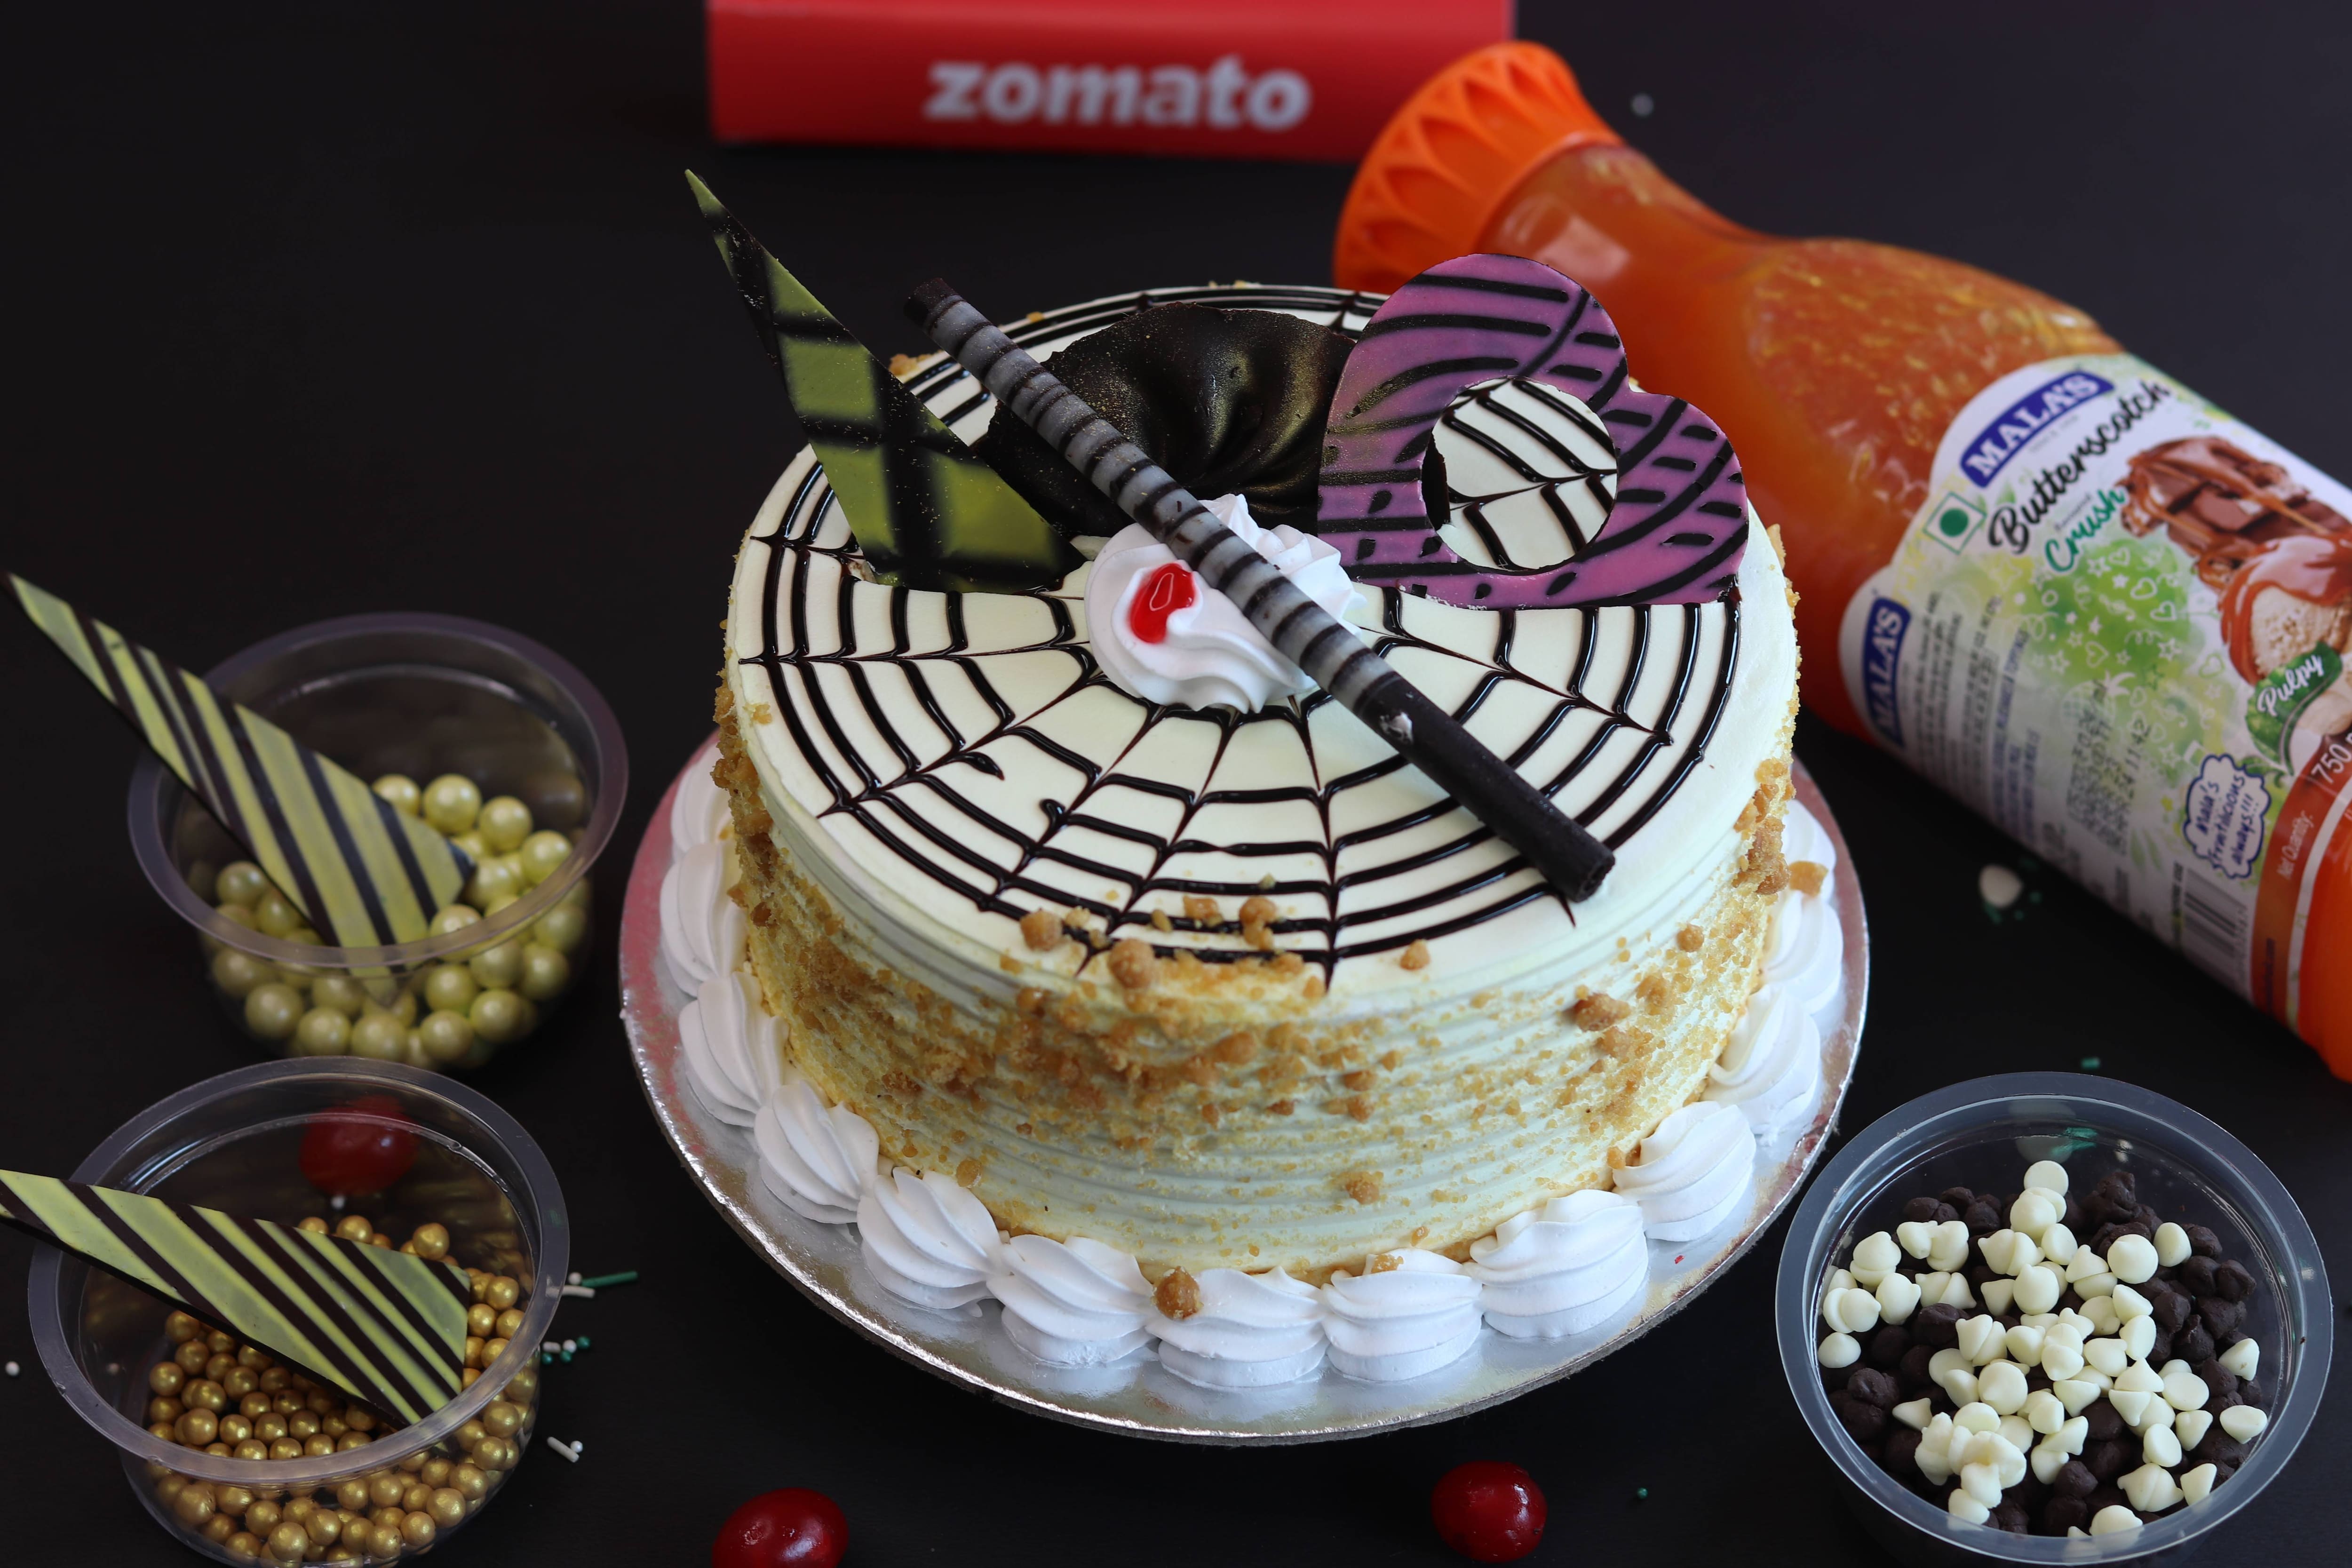 Cake & More, Civil Lines order online - Zomato